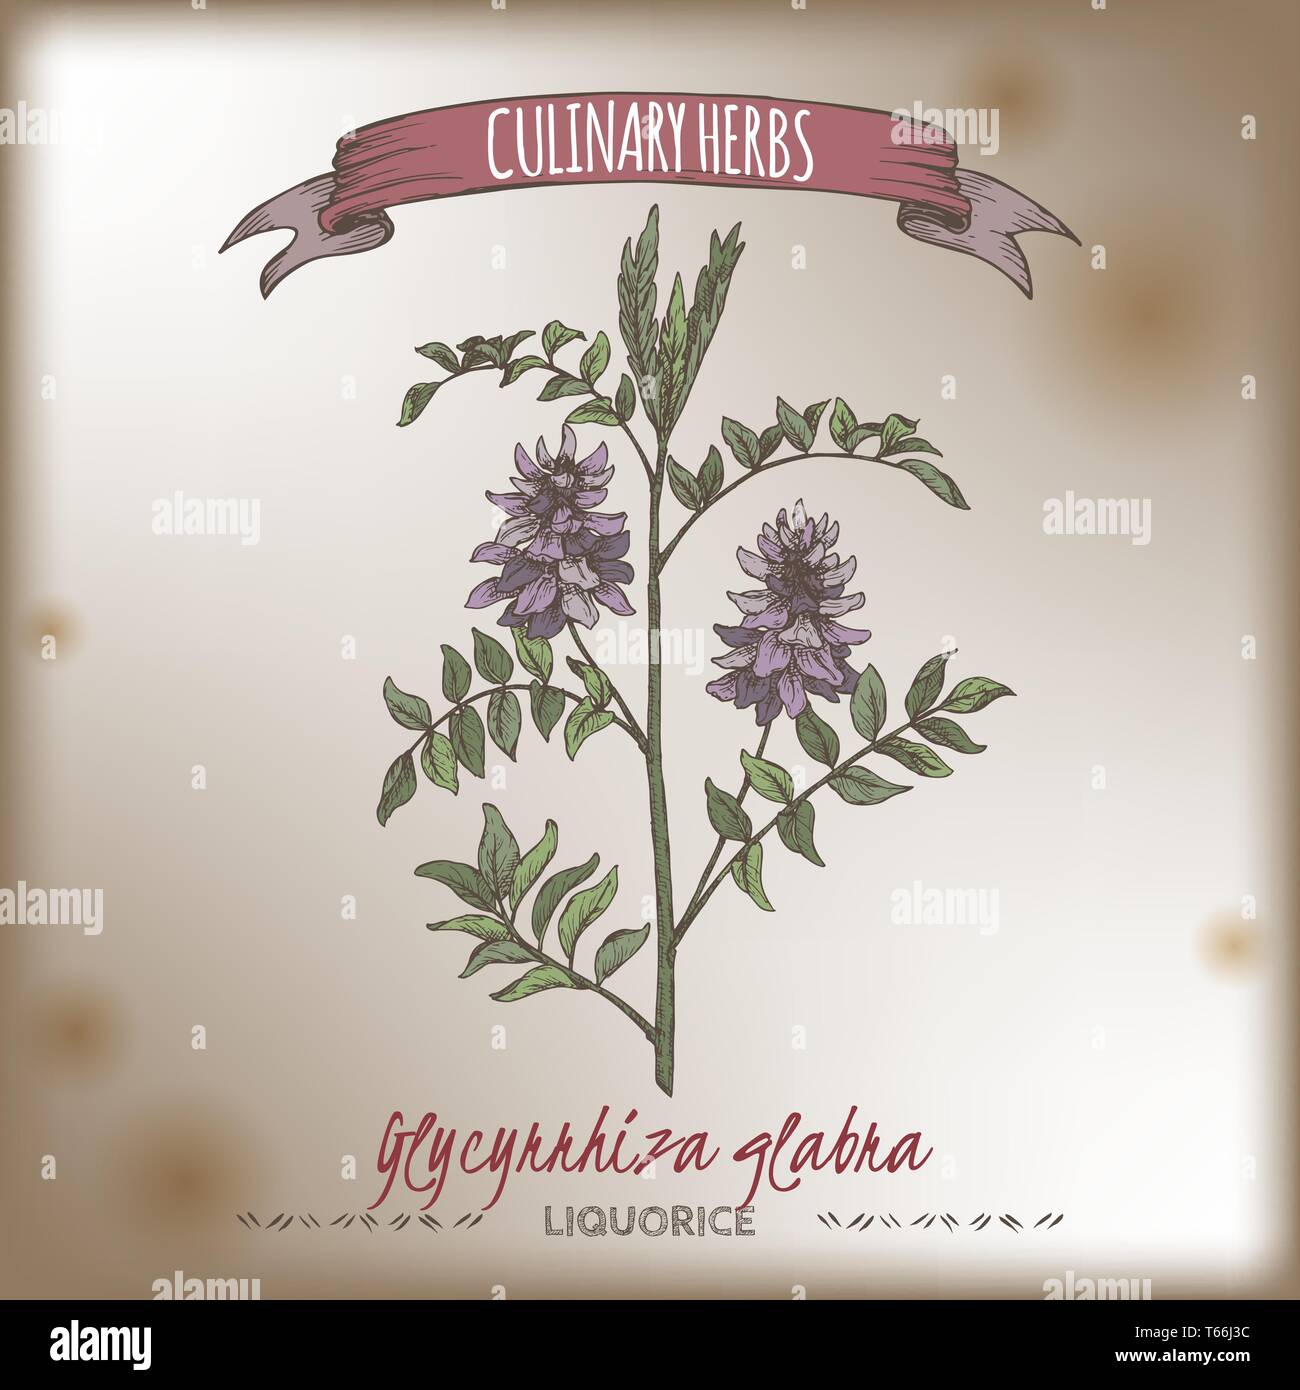 Glycyrrhiza glabra aka liquorice color sketch. Culinary herbs series. Stock Vector